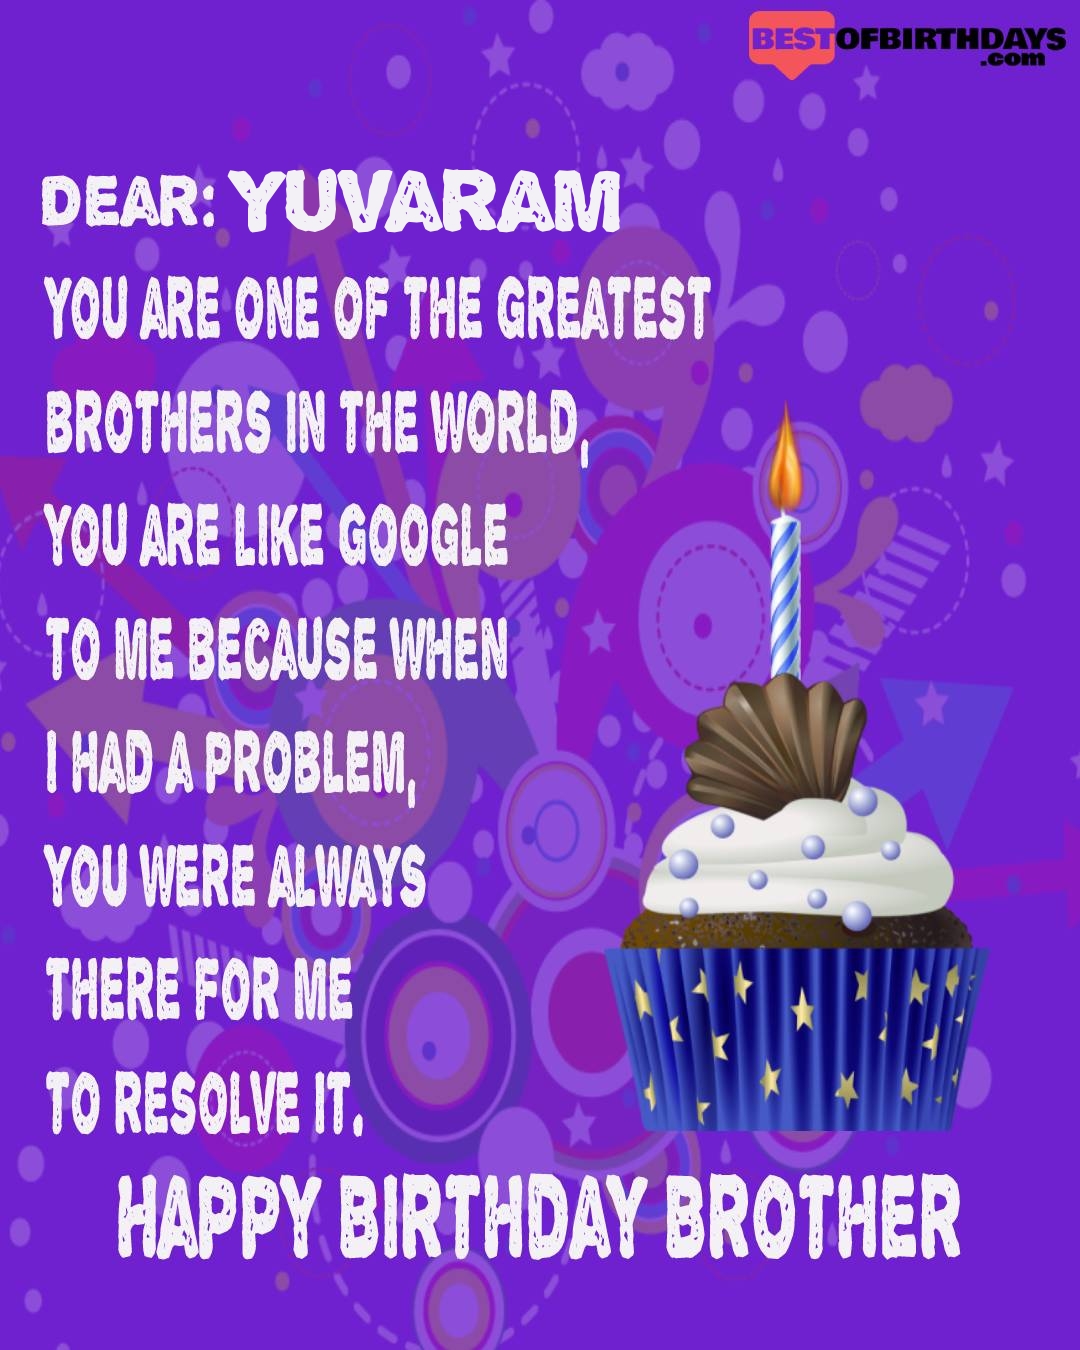 Happy birthday yuvaram bhai brother bro